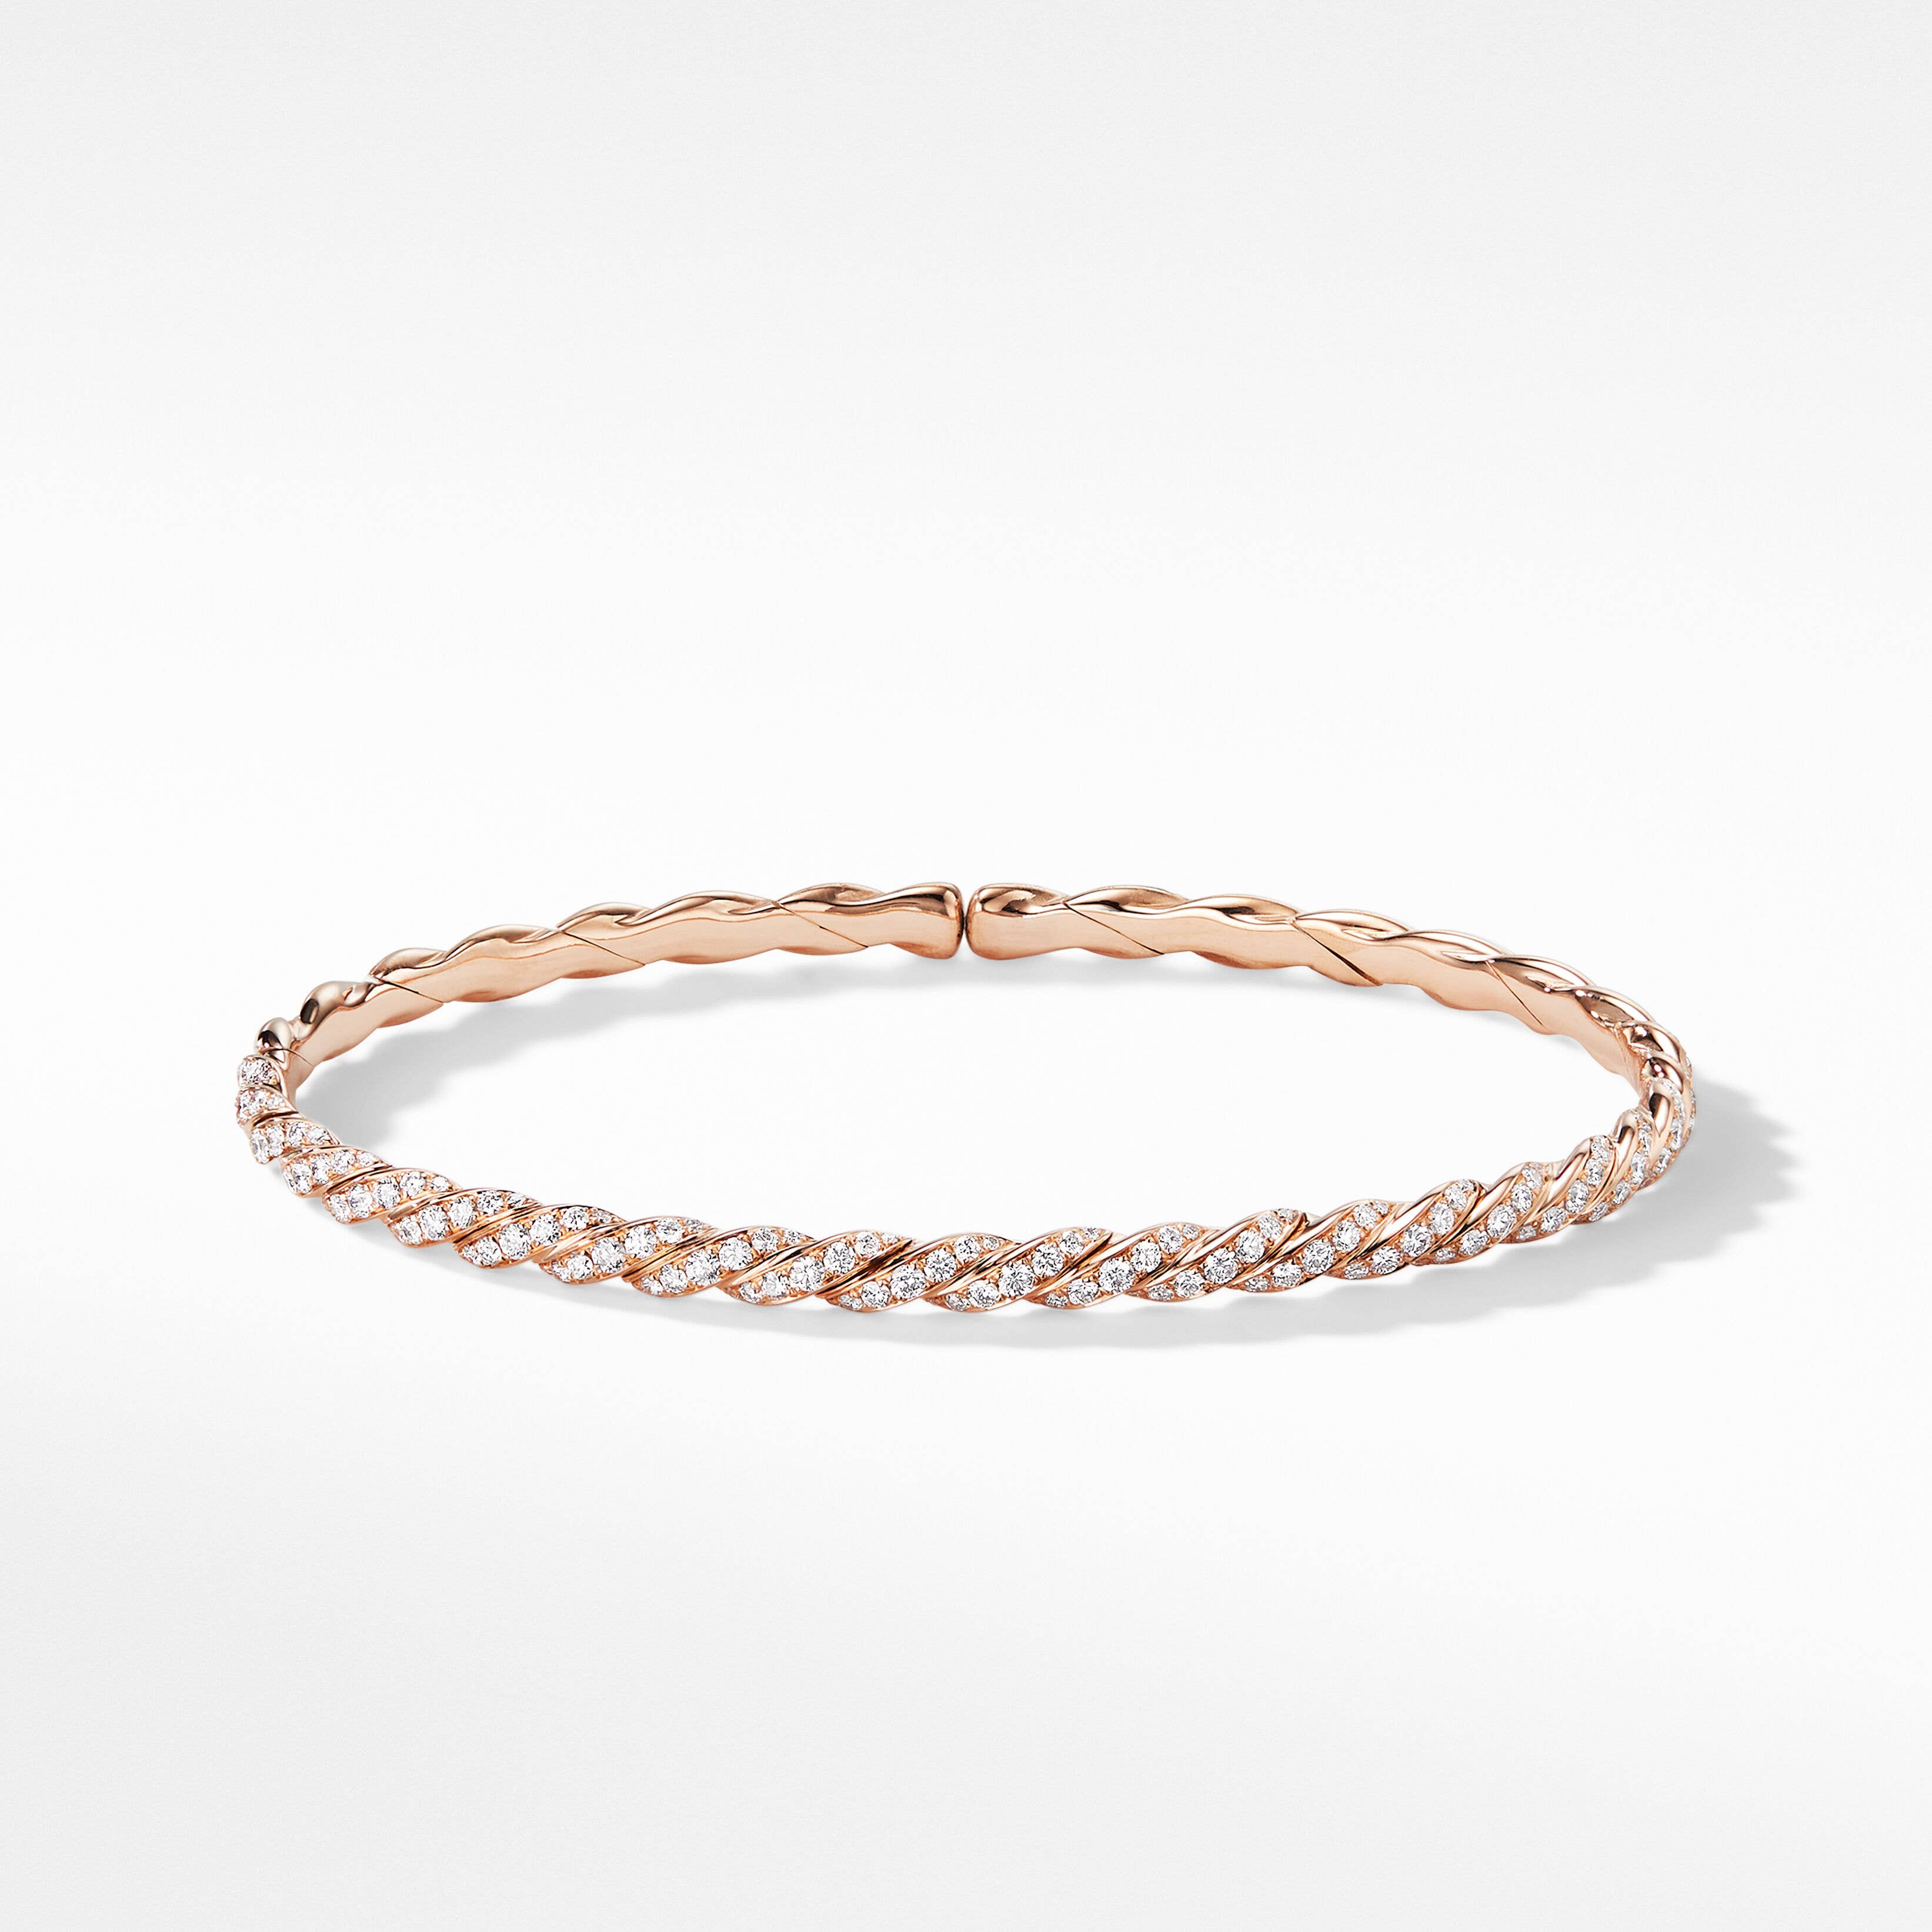 Pavéflex Bracelet in 18K Rose Gold with Diamonds